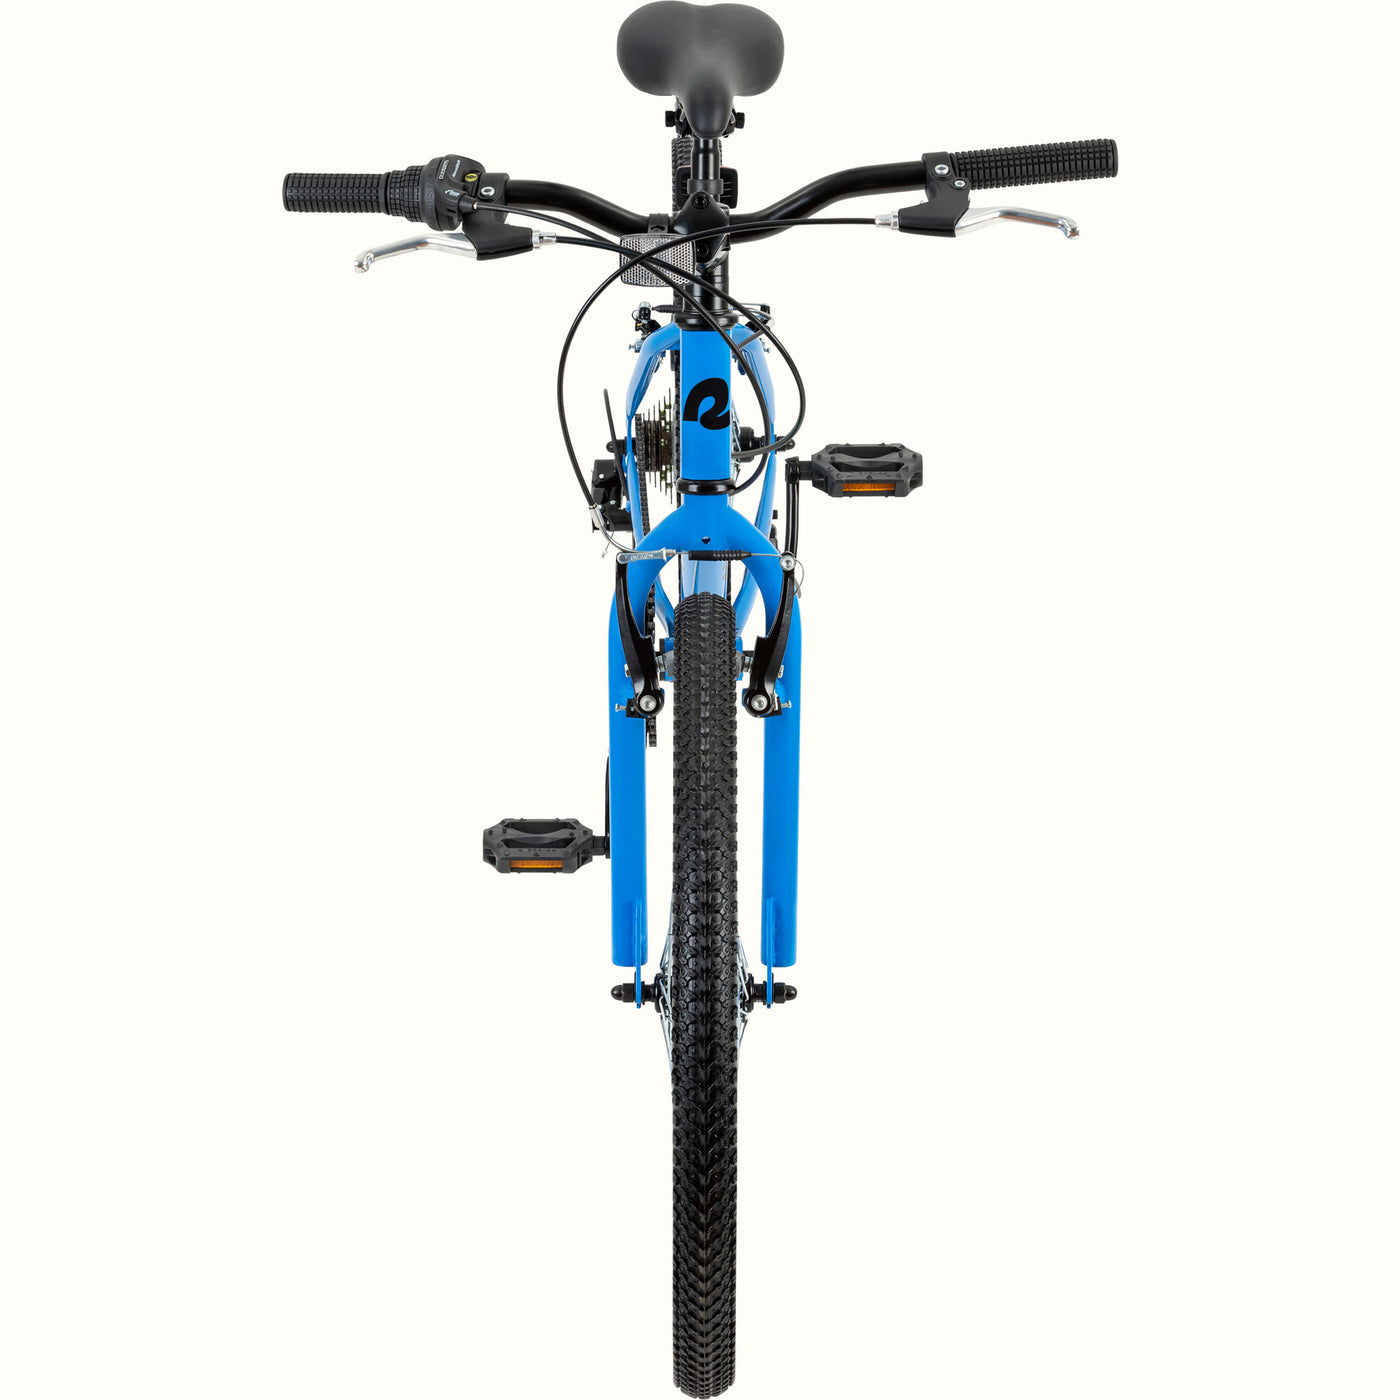 Koda 7-Speed 24” Kids’ Bike (8-11 years) | Cobalt